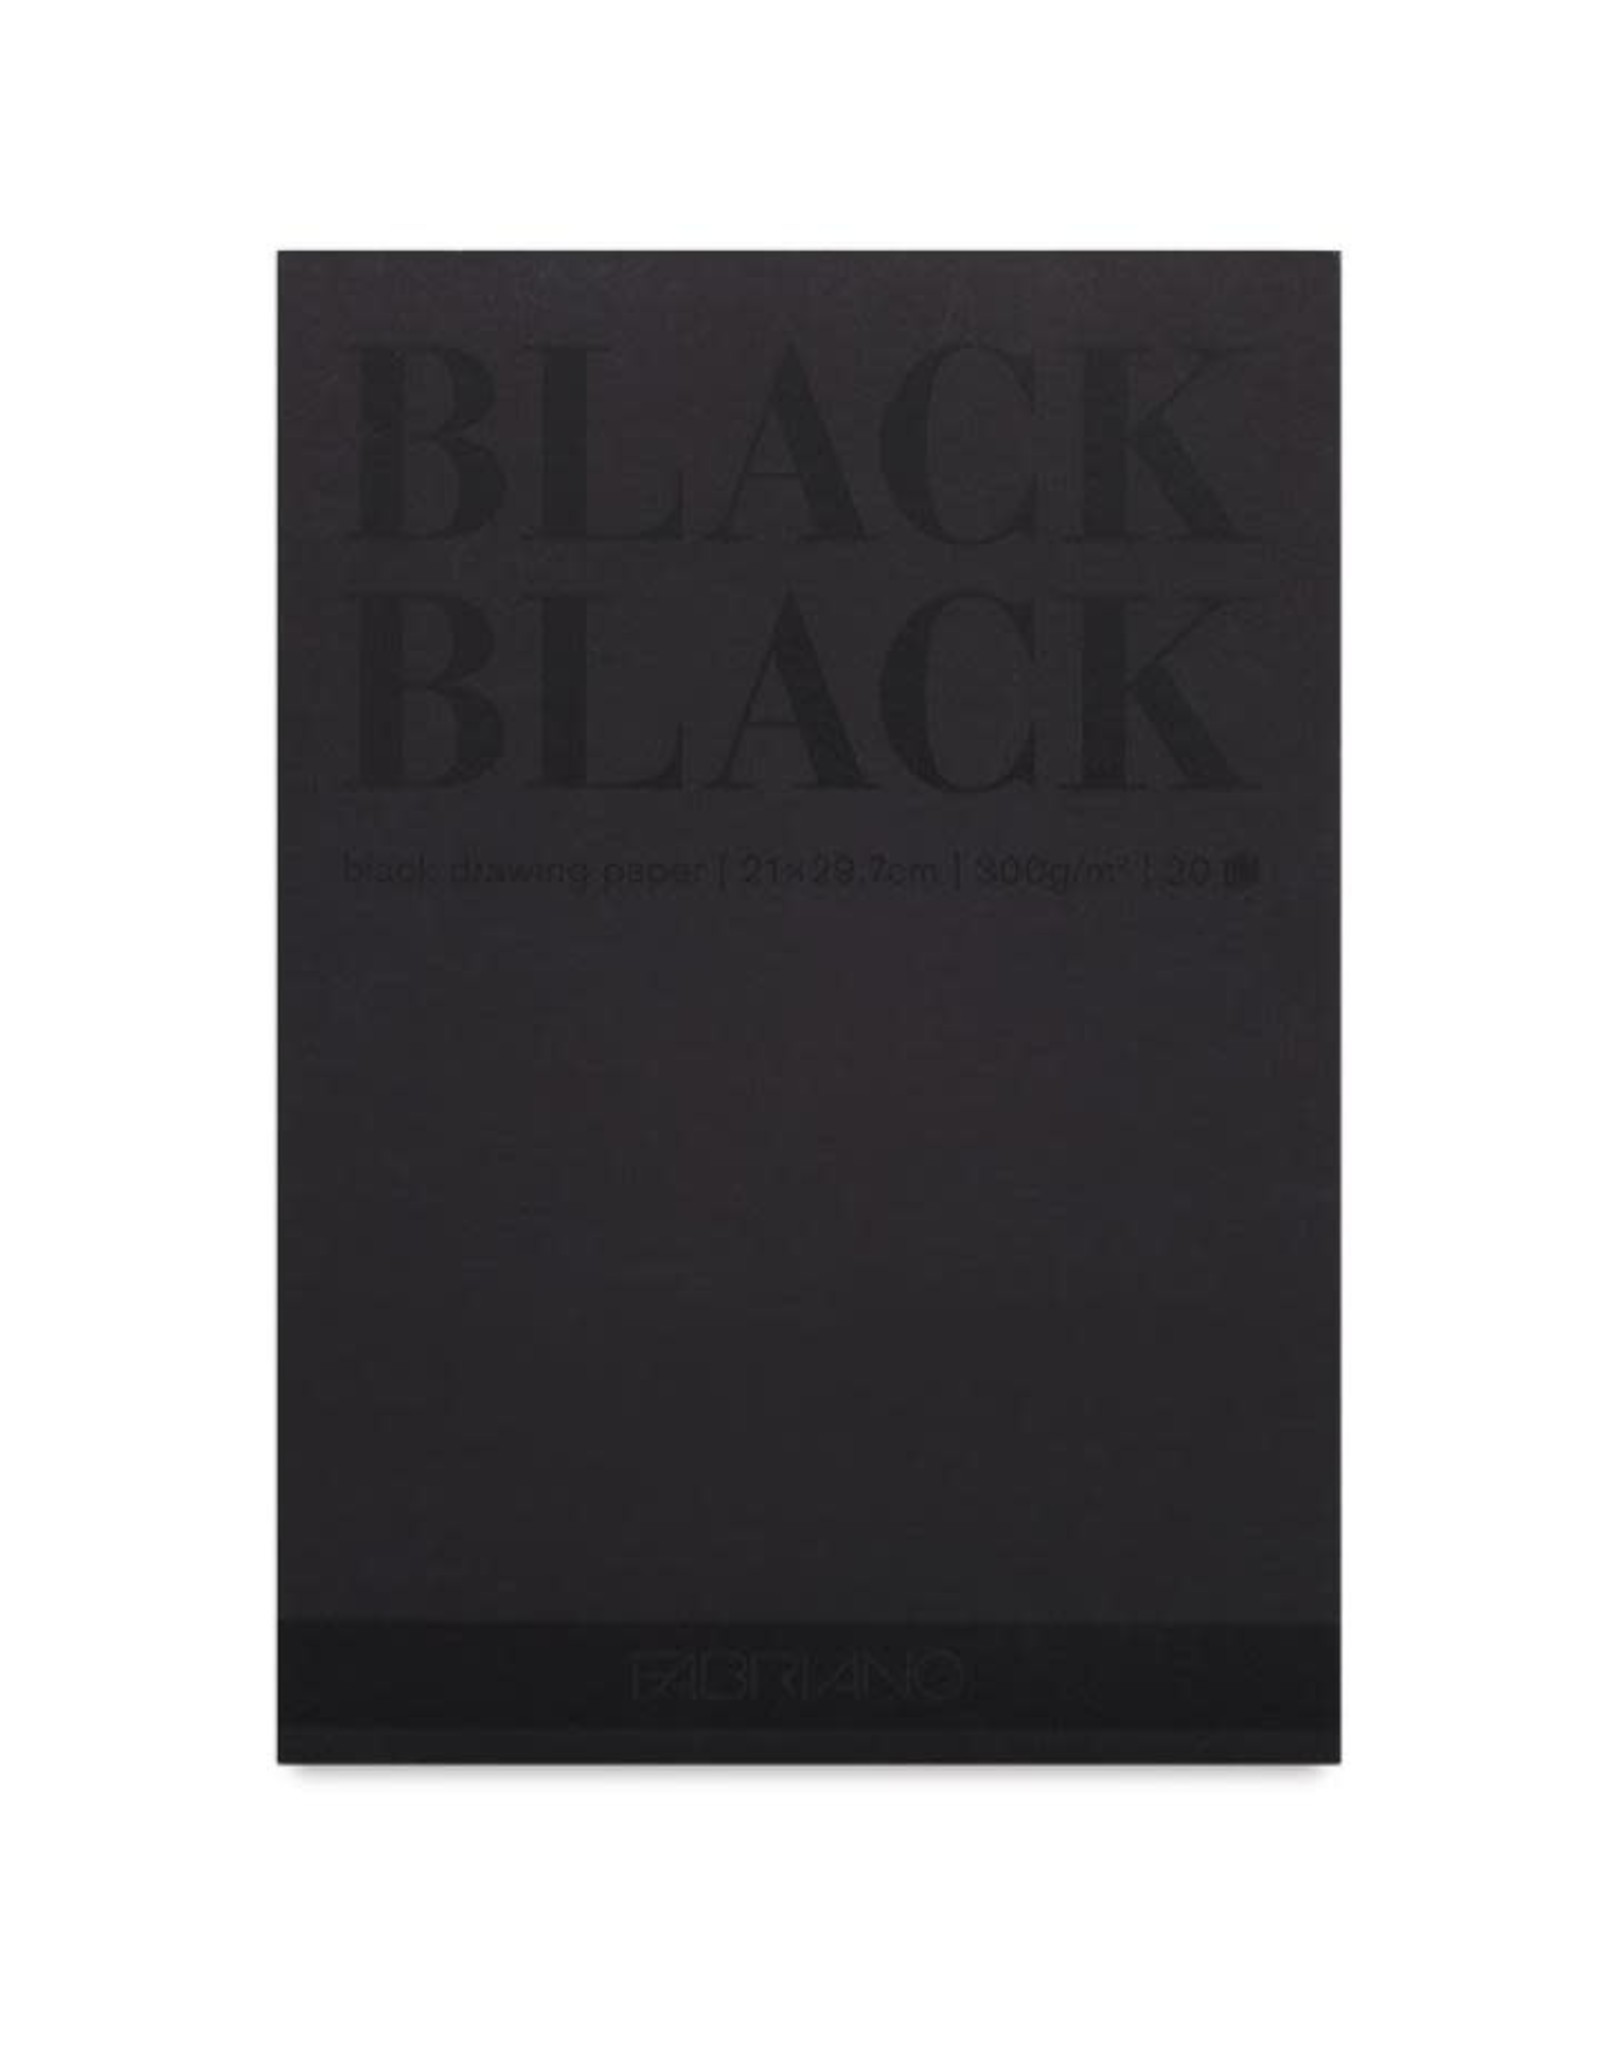 FABRIANO FABRIANO BLACK BLACK 8.5x12 PAD 20 SHEETS 300gms